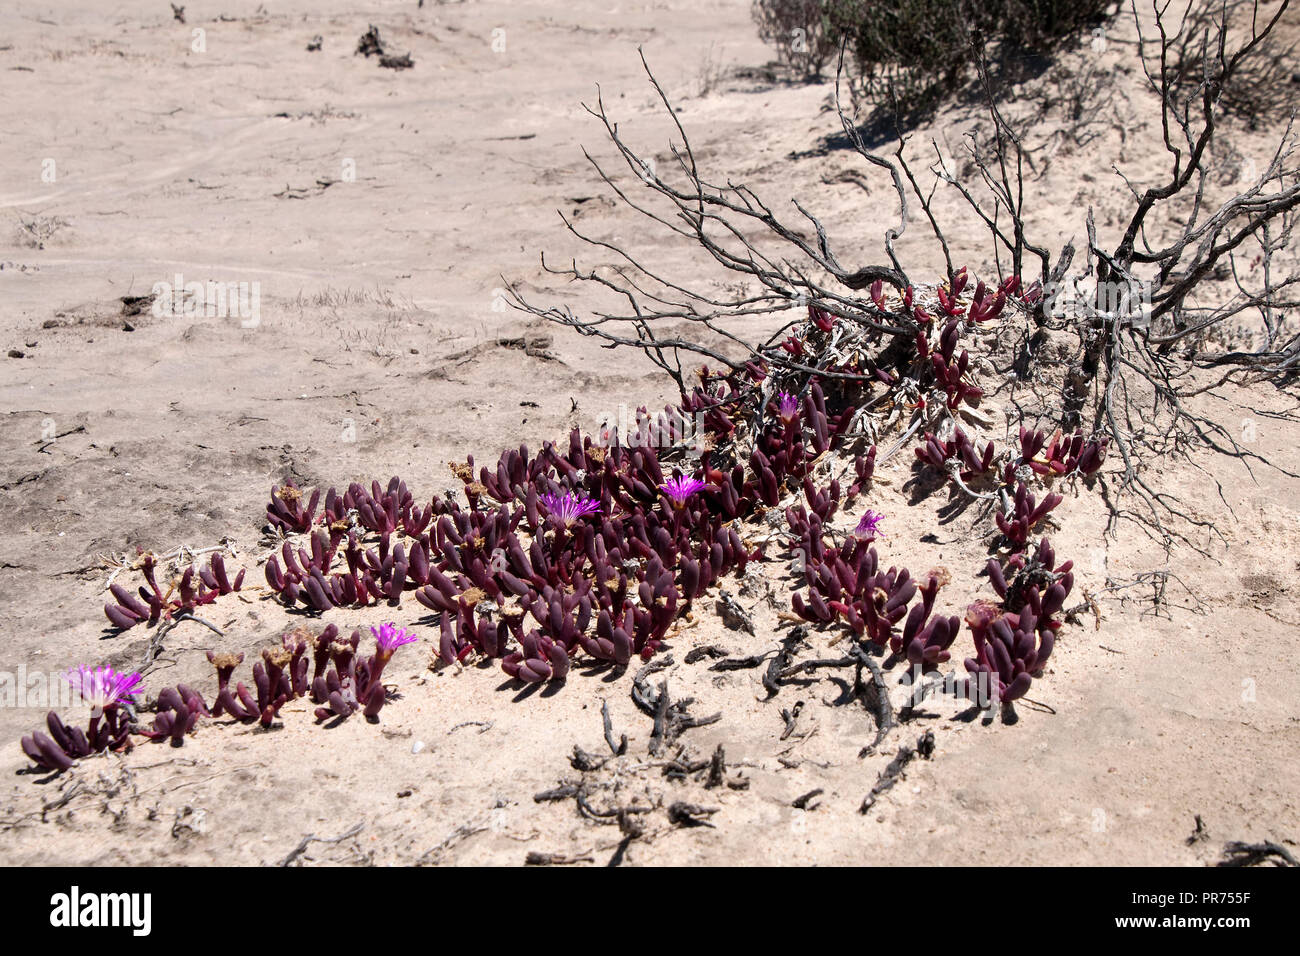 Chinocup Nature Reserve Western Australia, purple flowering pigface spreading across the desert landscape Stock Photo